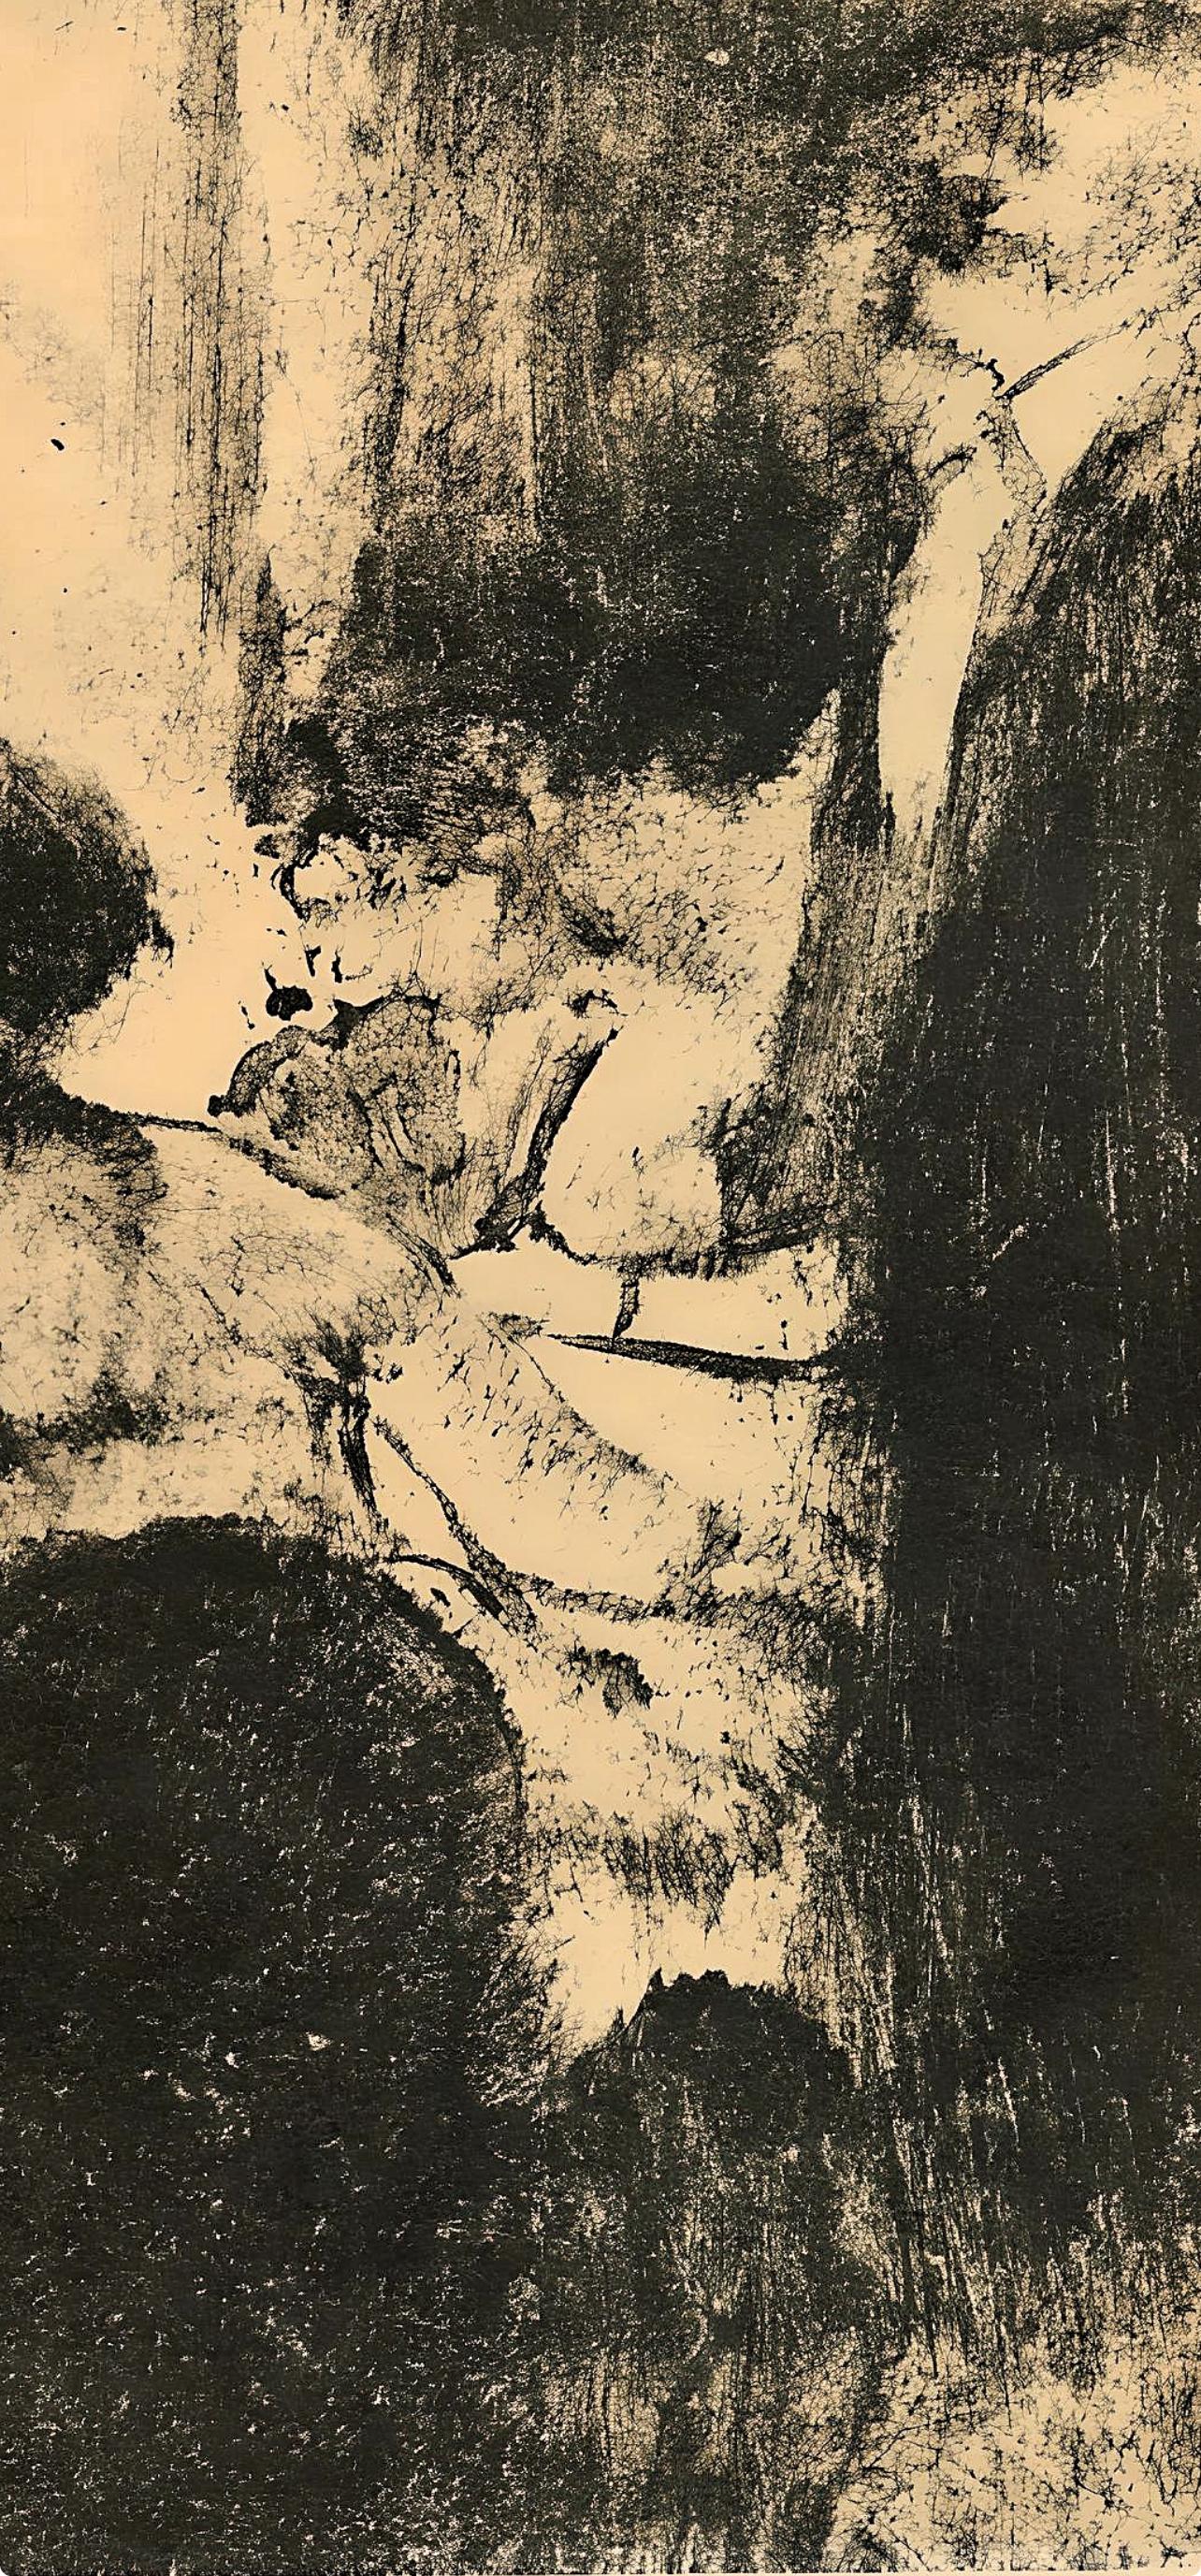 Degas, La Loge, Les Monotypes (after) - Impressionist Print by Edgar Degas